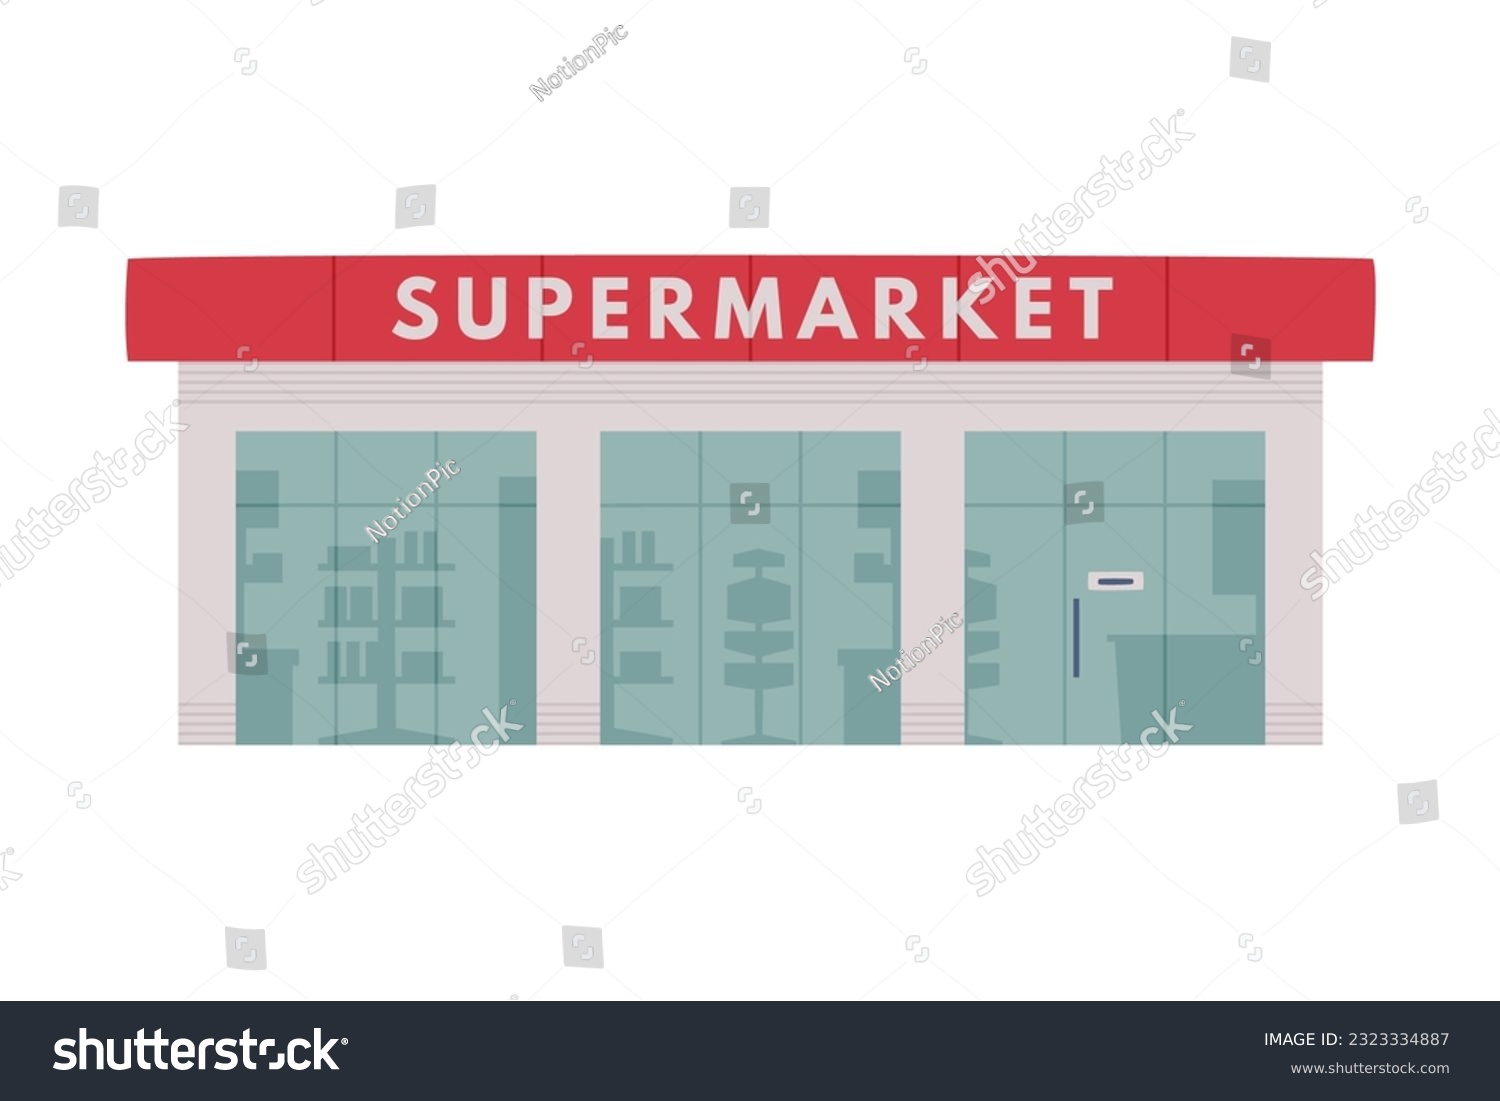 SVG of Gas Filling Station Supermarket Building as Facility Selling Fuel for Motor Vehicle Vector Illustration svg